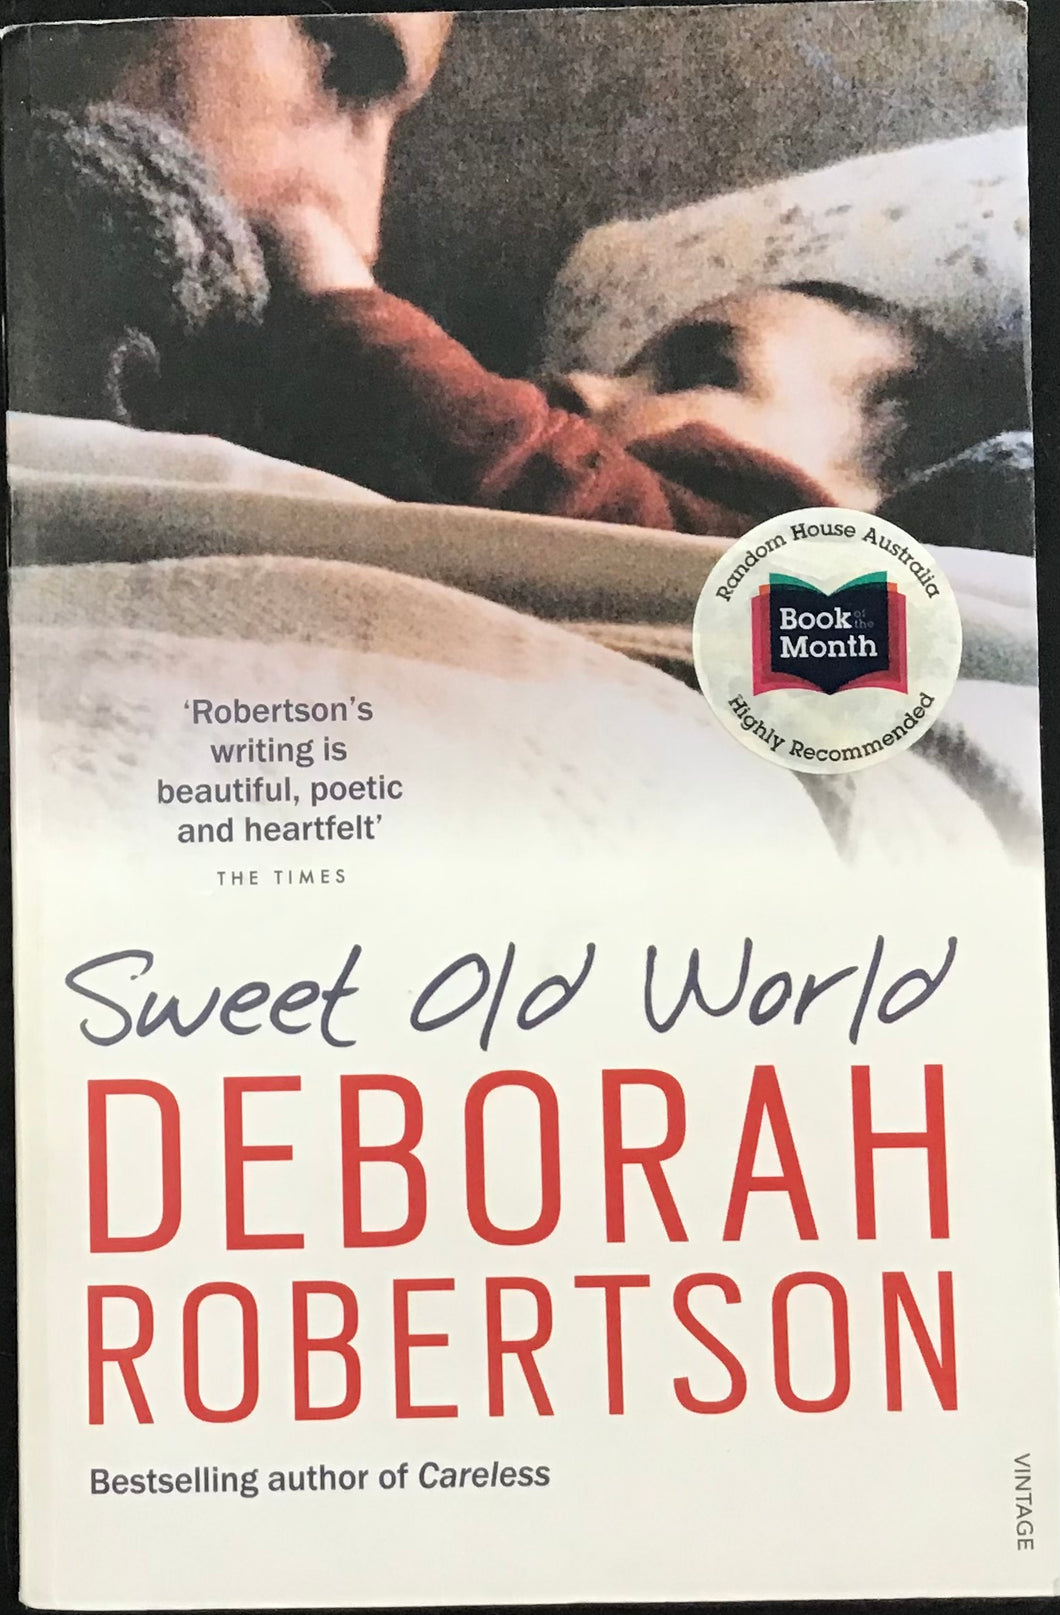 Sweet Old World, Deborah Robertson